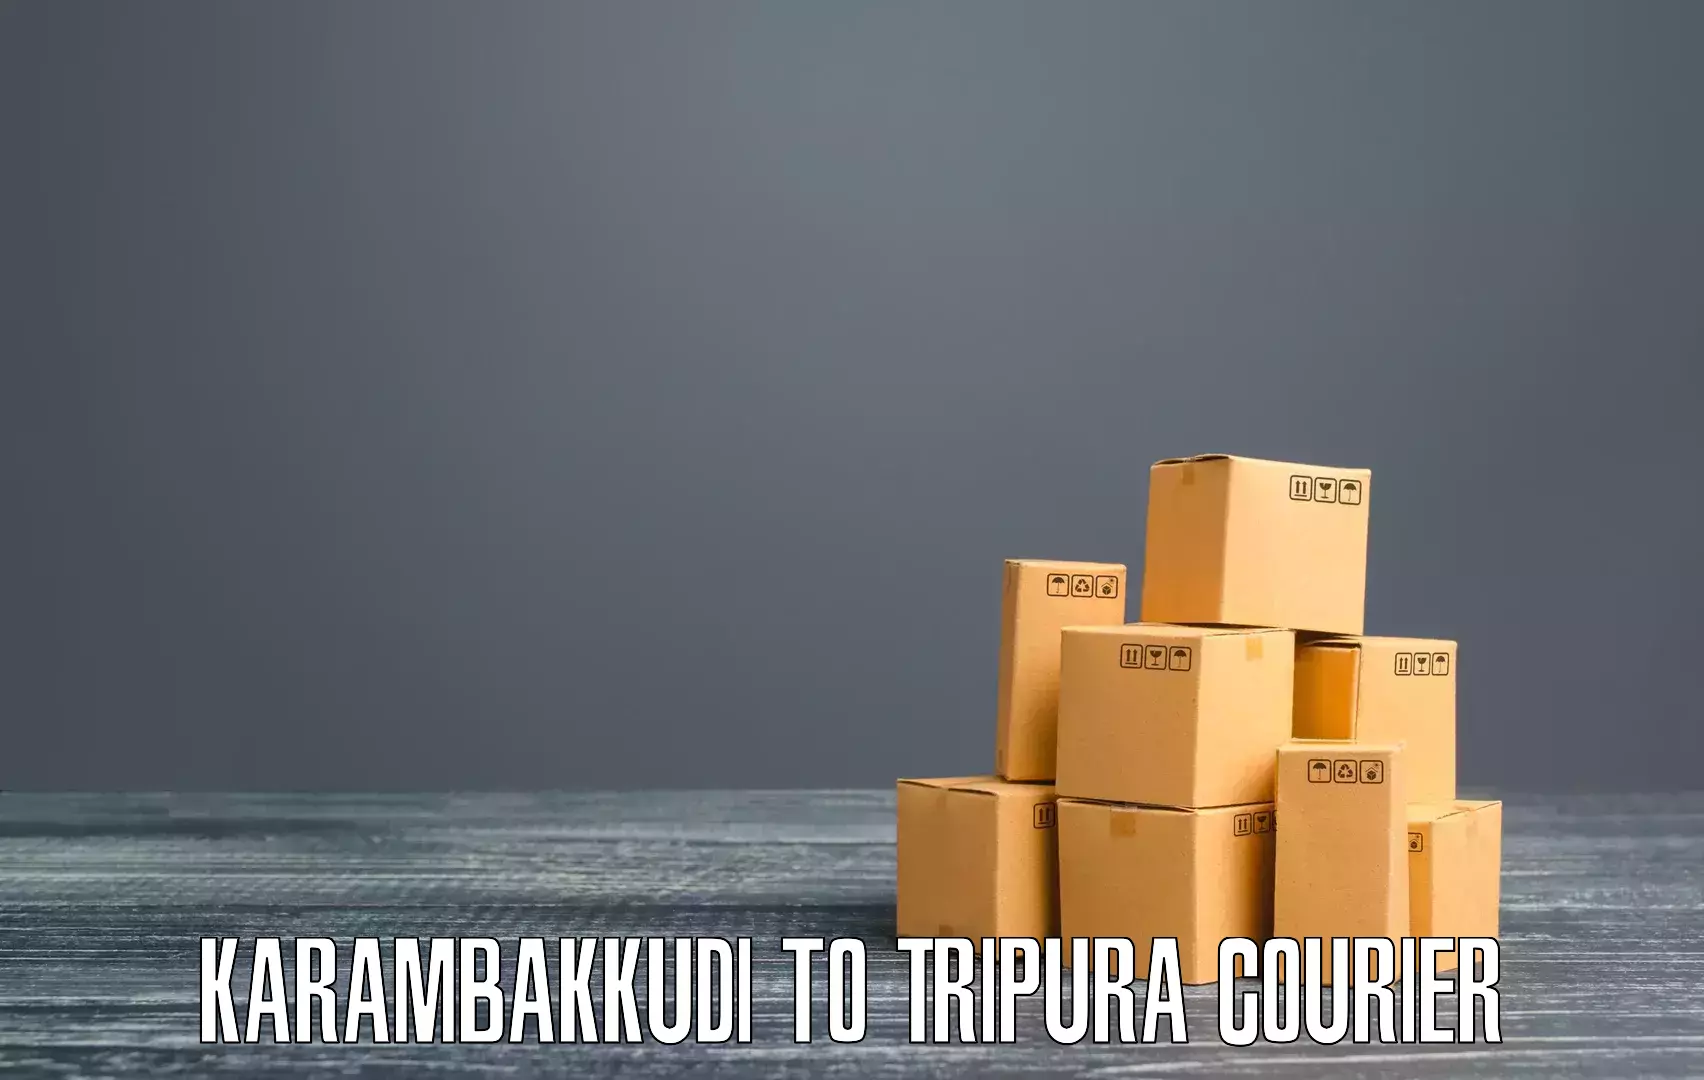 Easy access courier services in Karambakkudi to Tripura